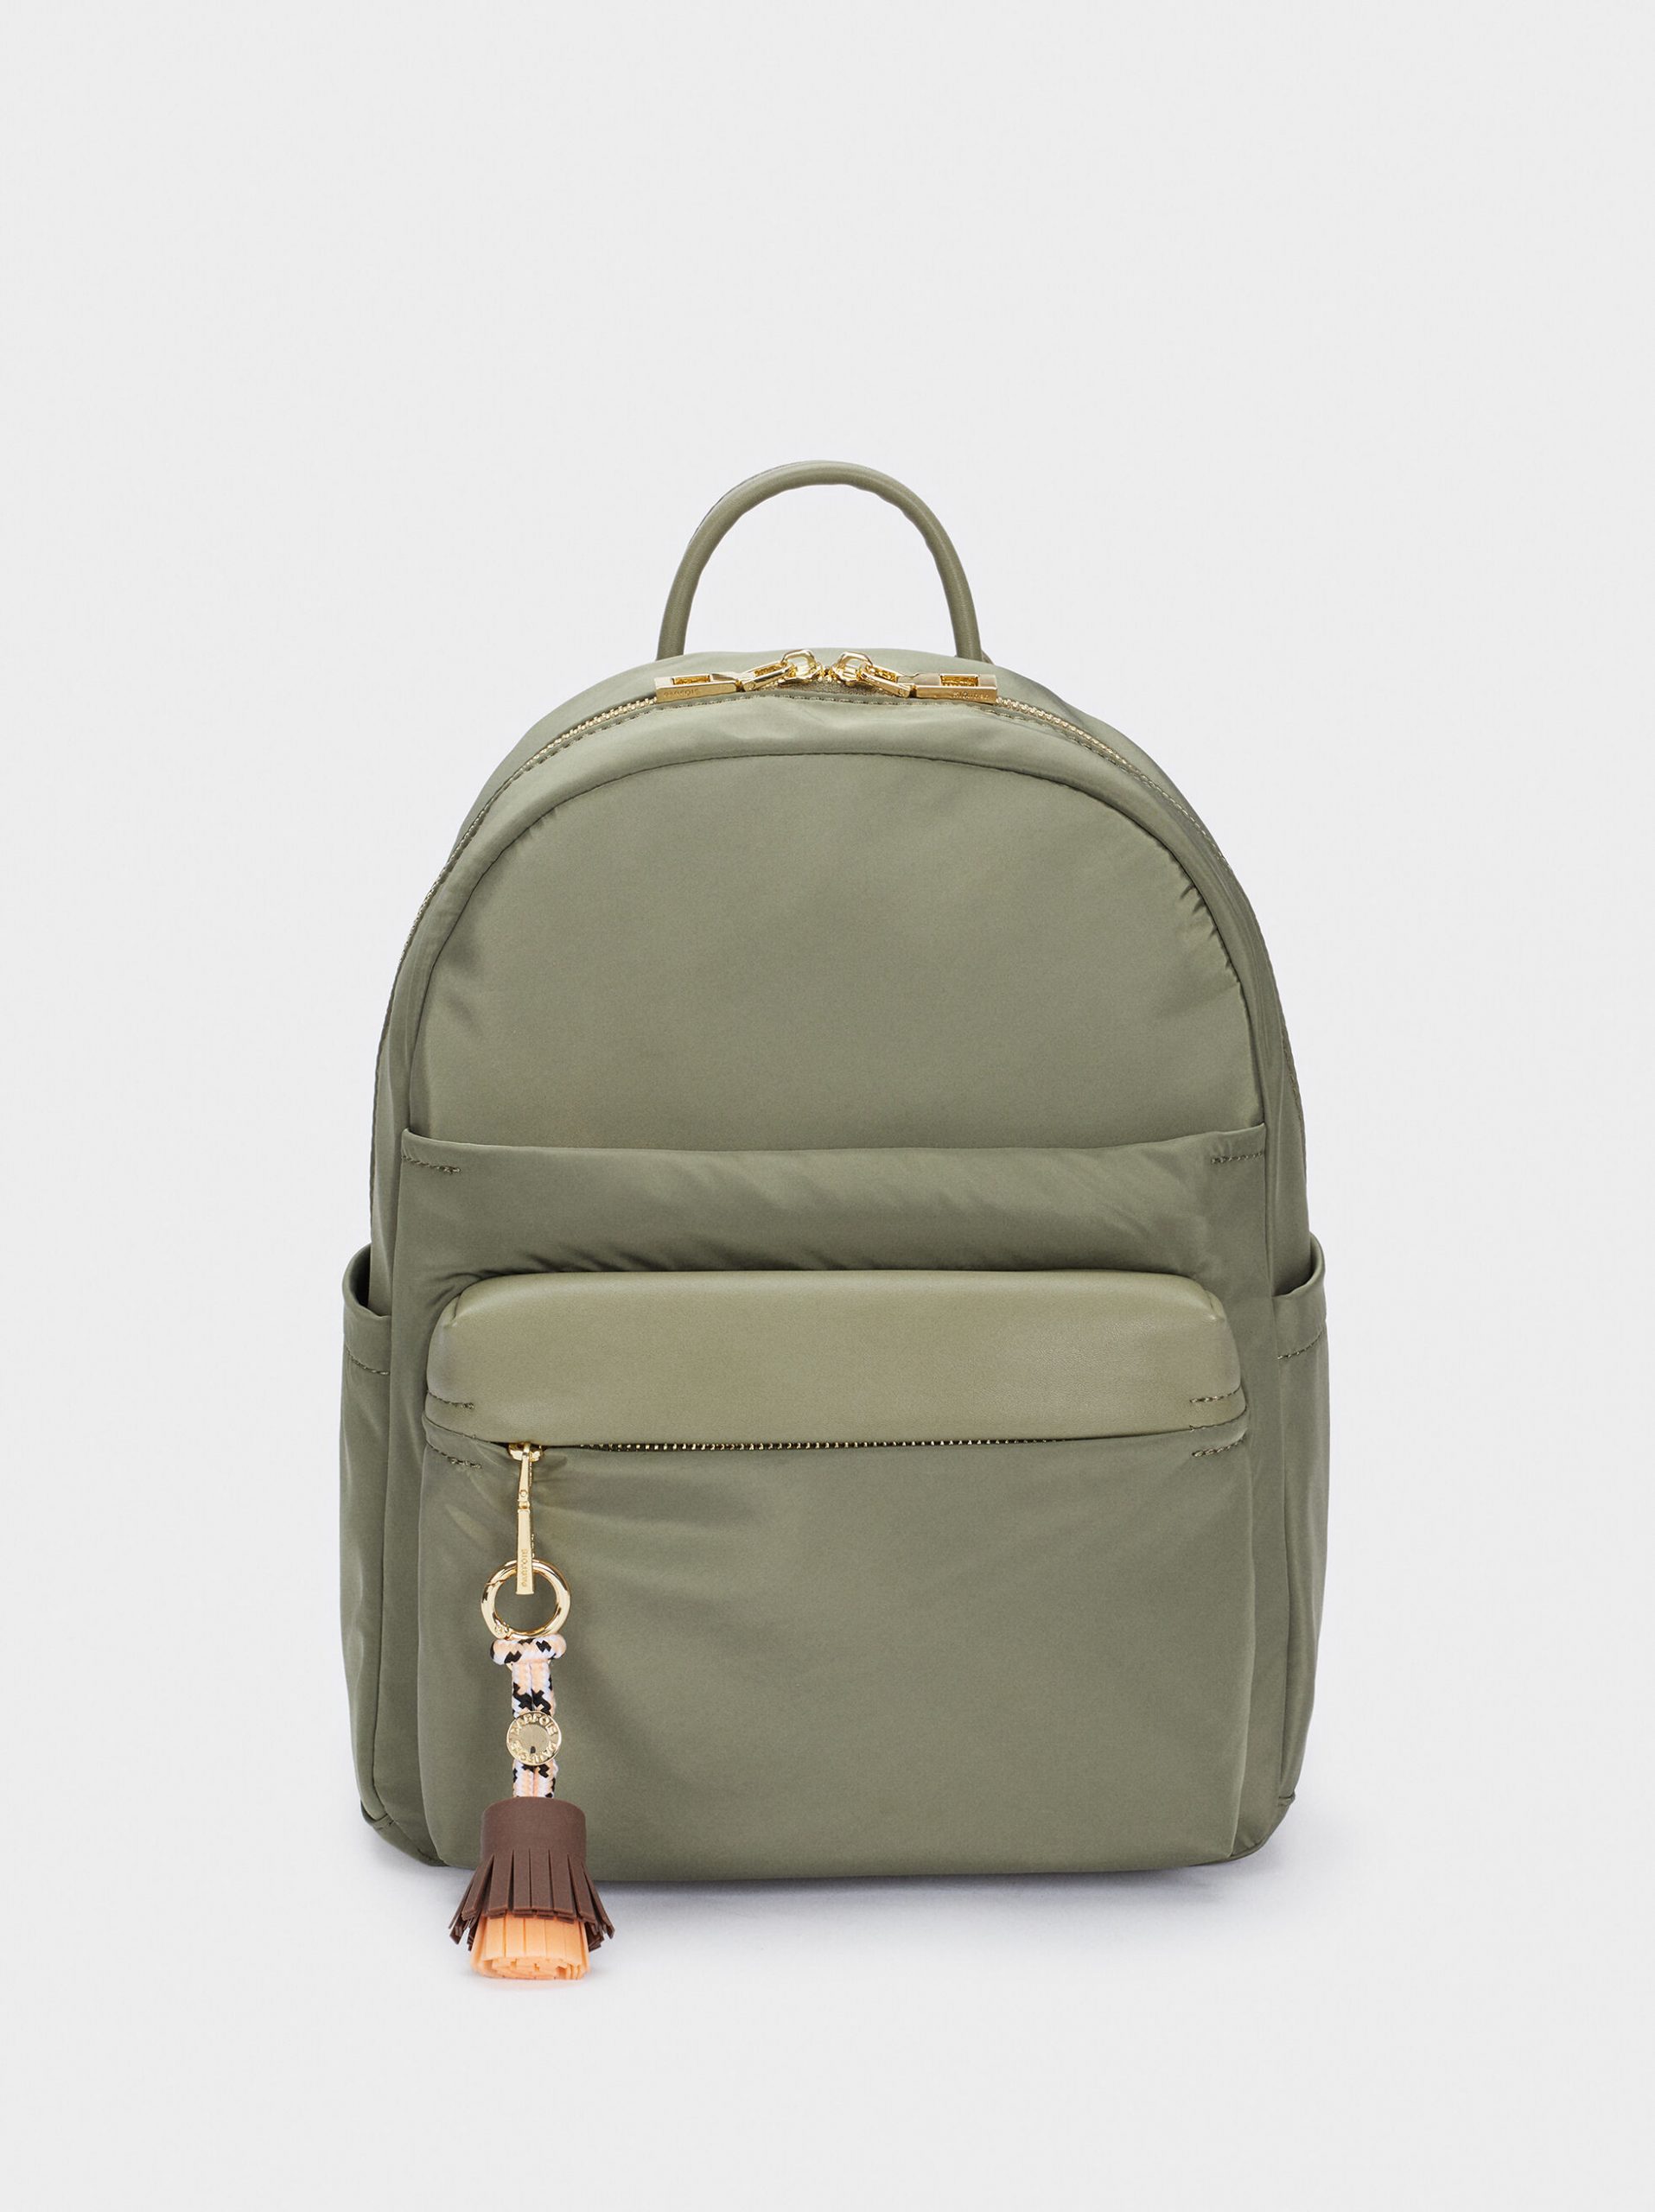 Moss green waterproof canvas backpack